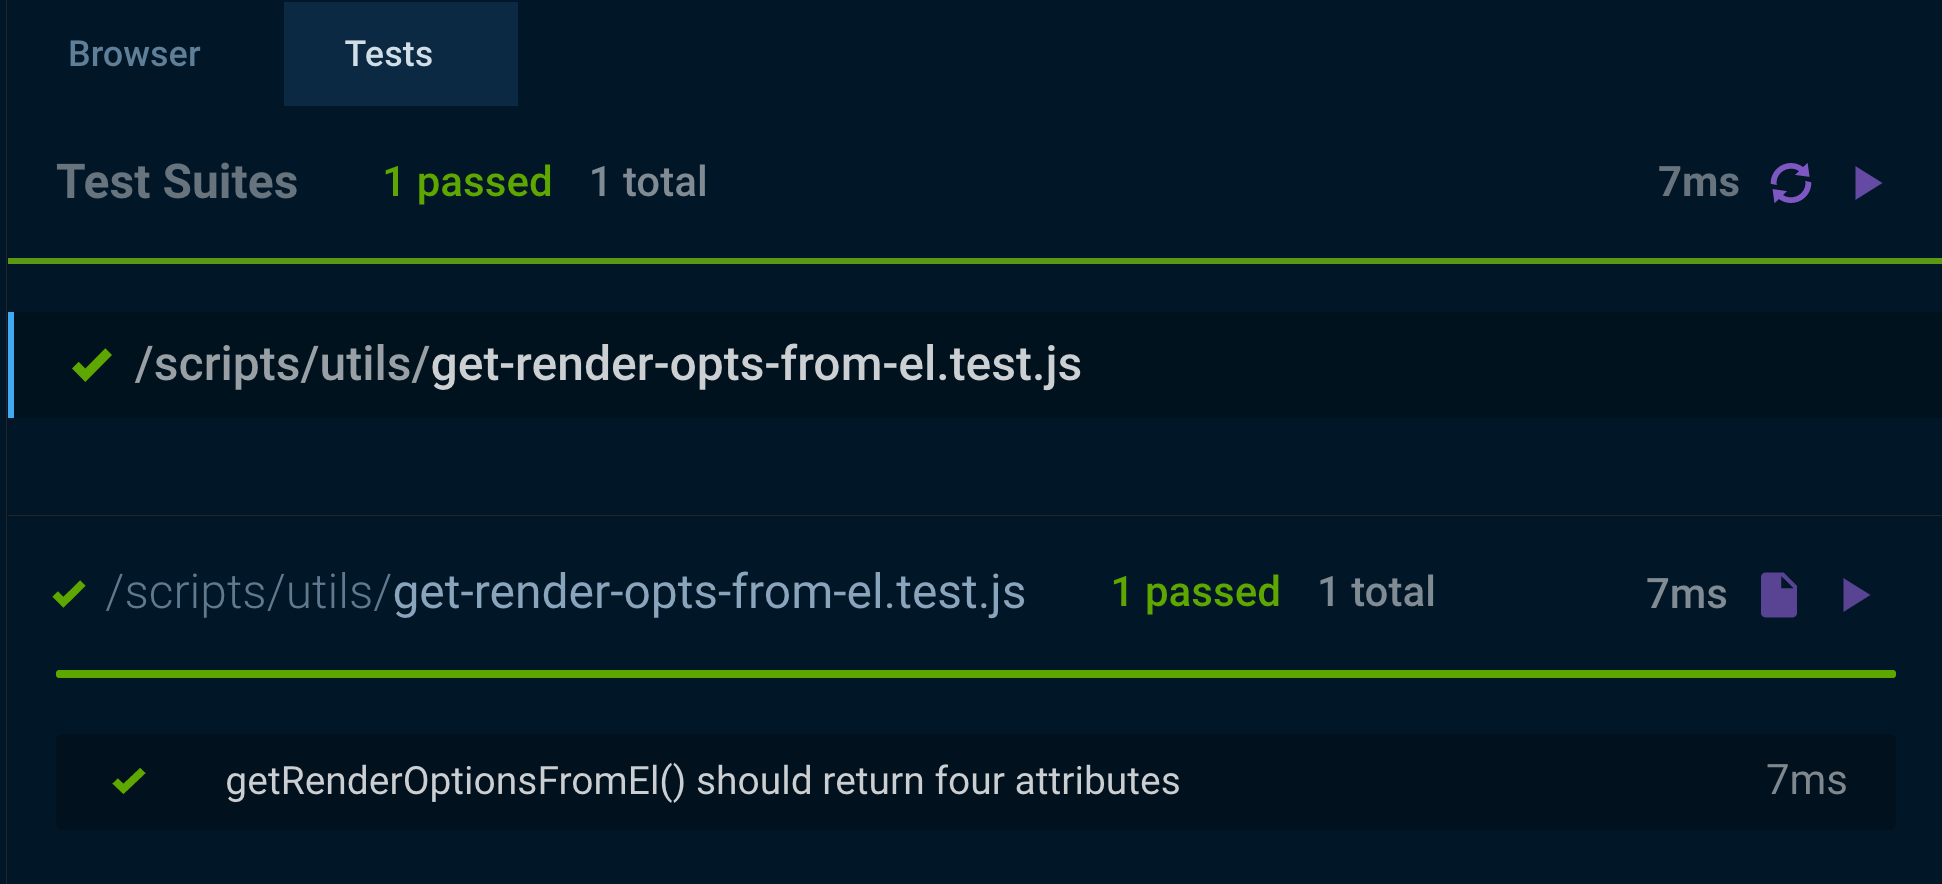 'getRenderOptionsFromEl() should return four attributes' test passes